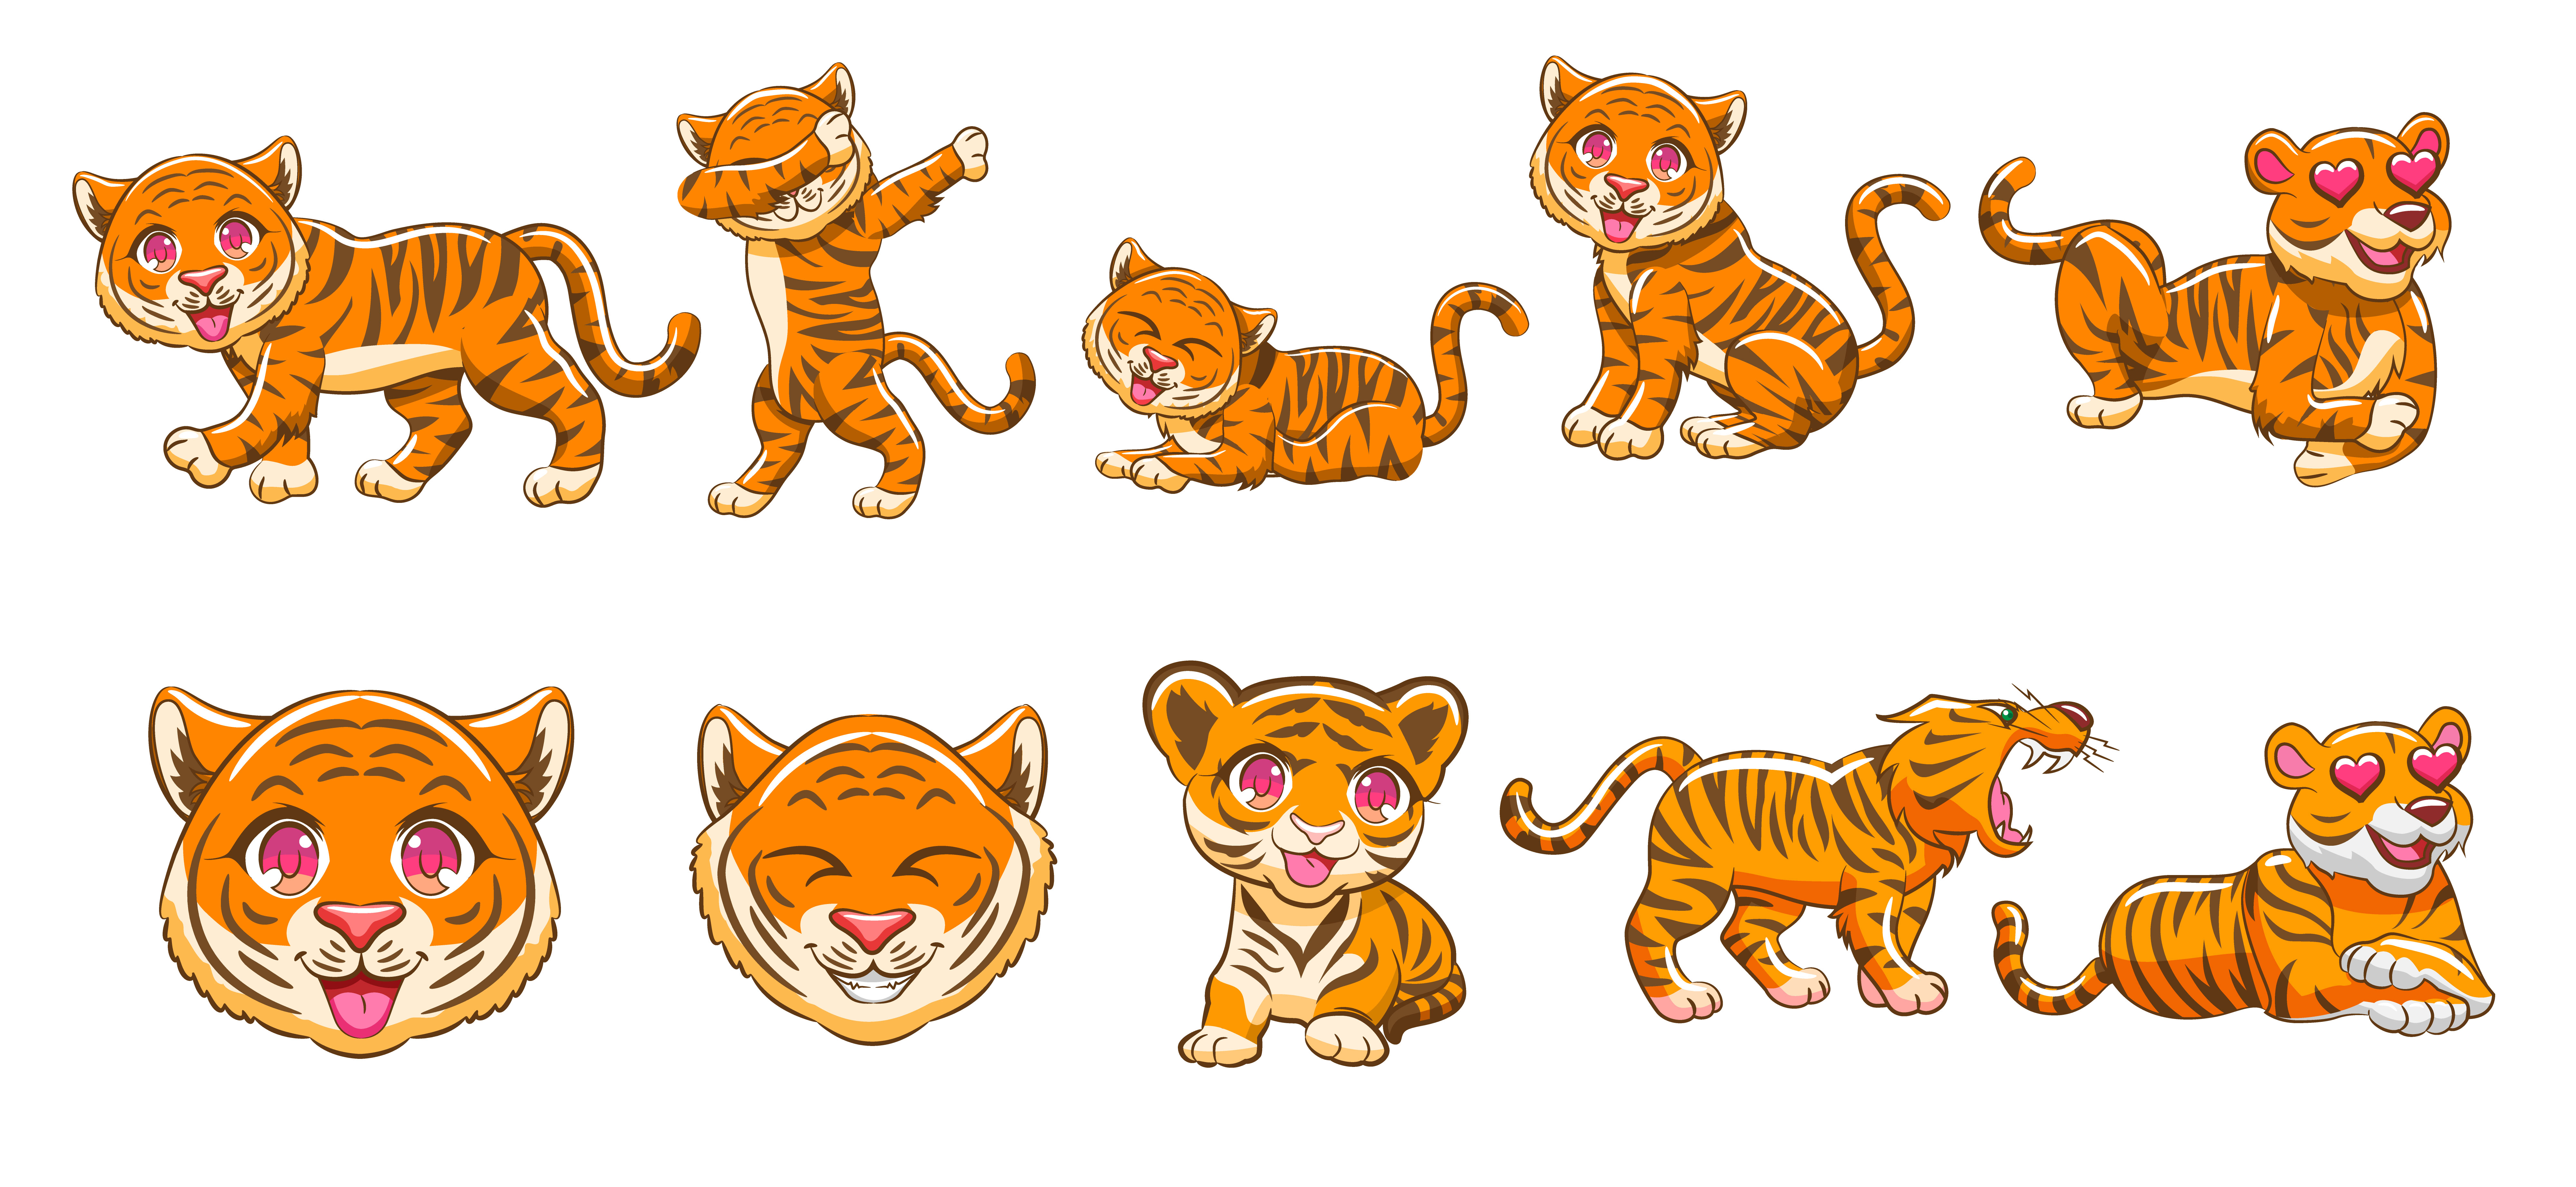 conjunto de dibujos animados de tigre kawaii 963021 Vector en Vecteezy